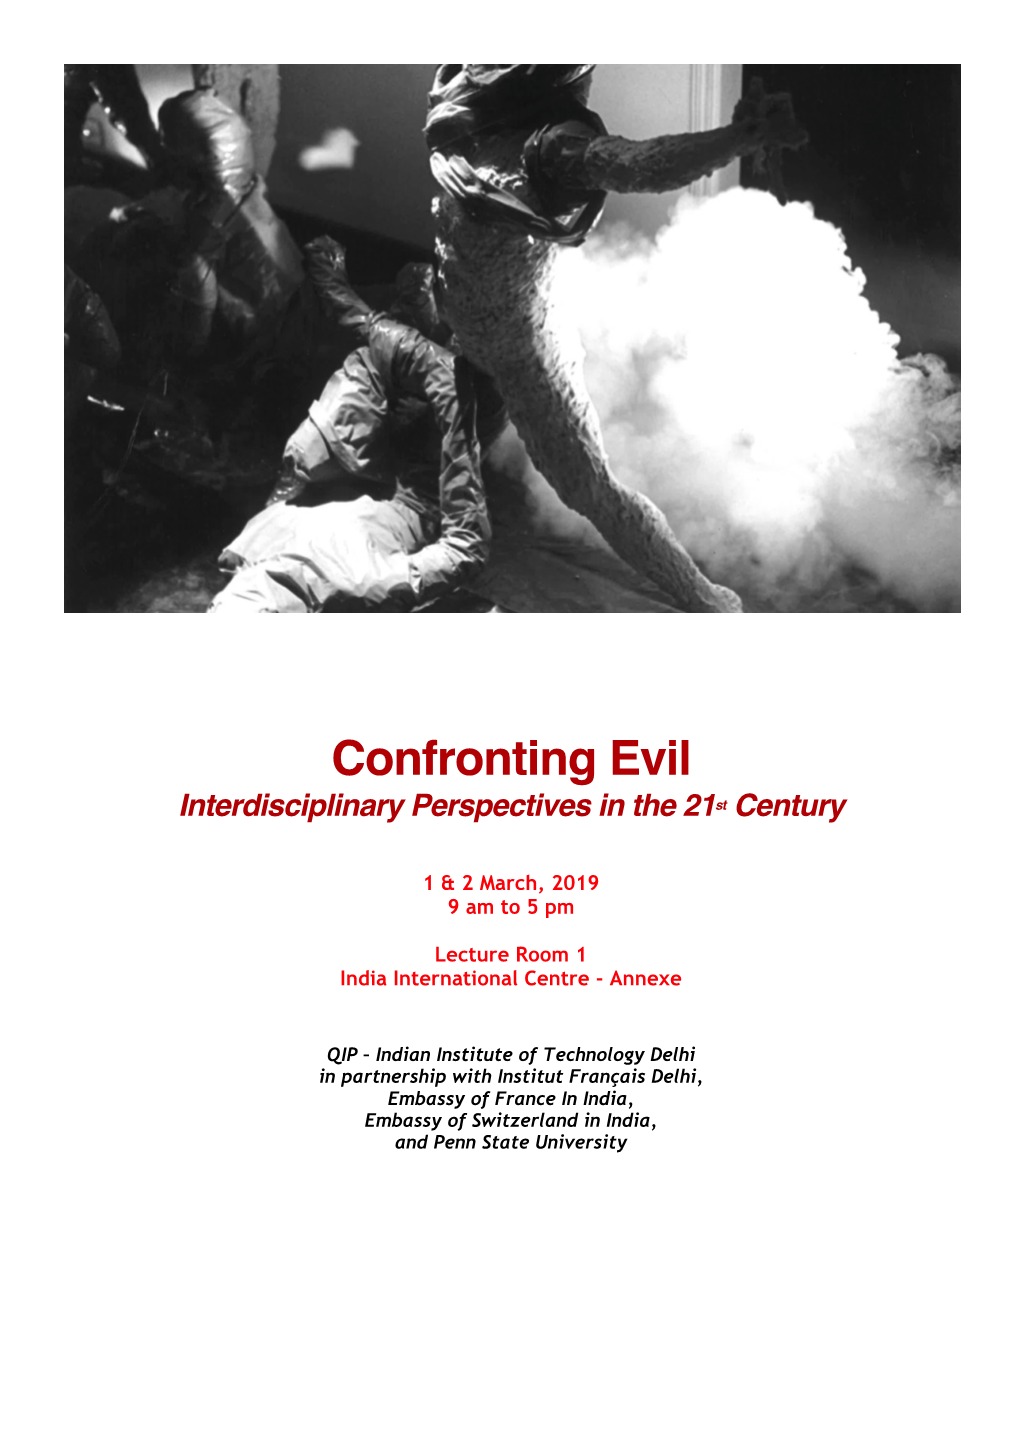 Confronting Evil Brochure